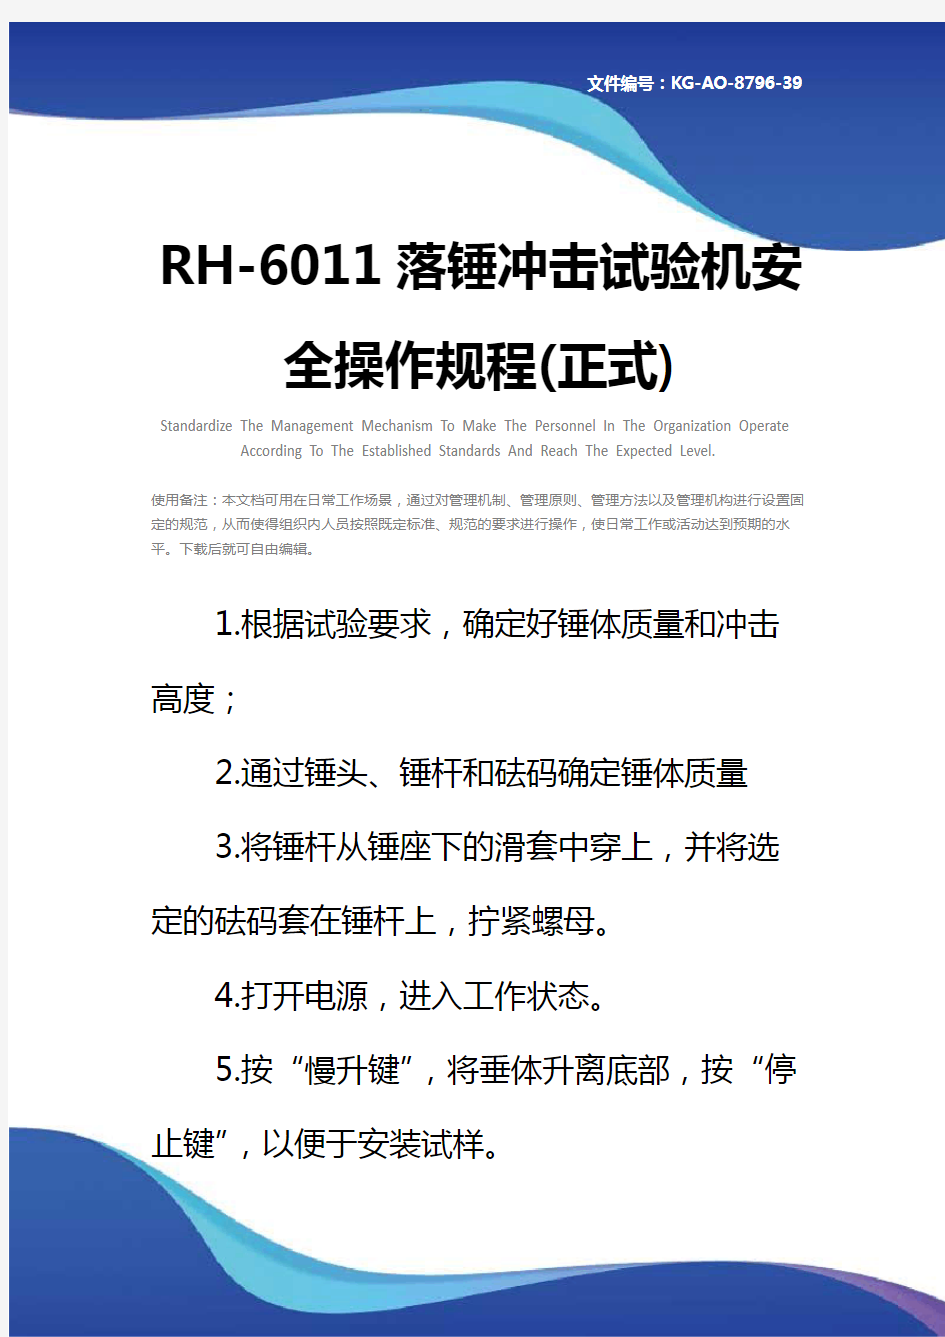 RH-6011落锤冲击试验机安全操作规程(正式)